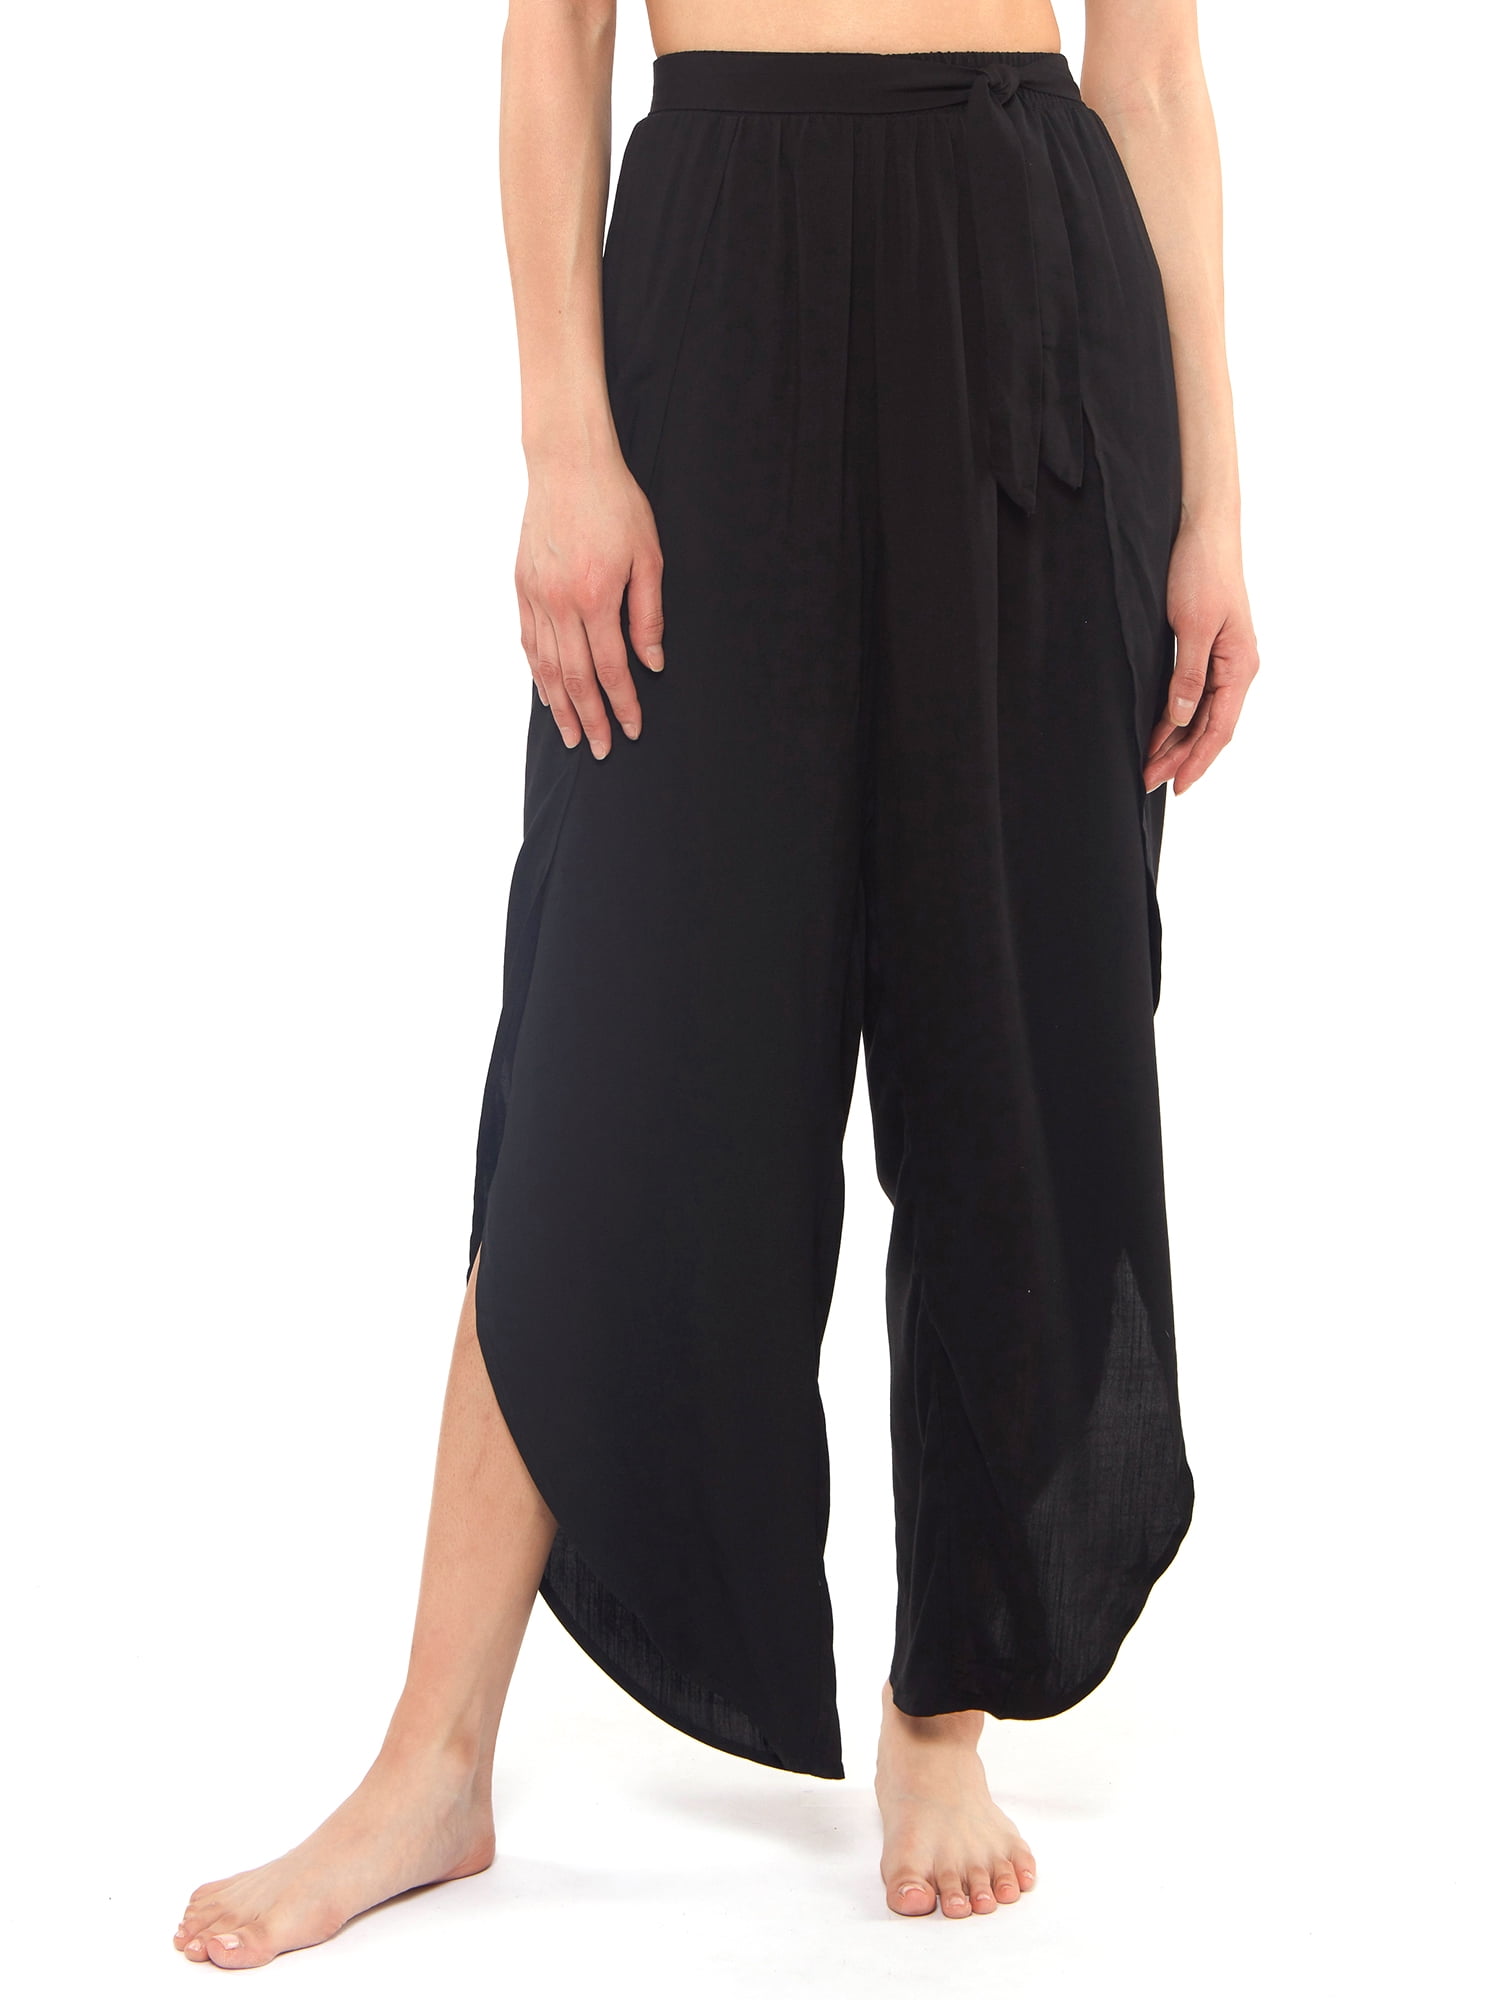 Jessica Simpson Women's Contemporary Basic Solid Tie Waist Beach Pant ...